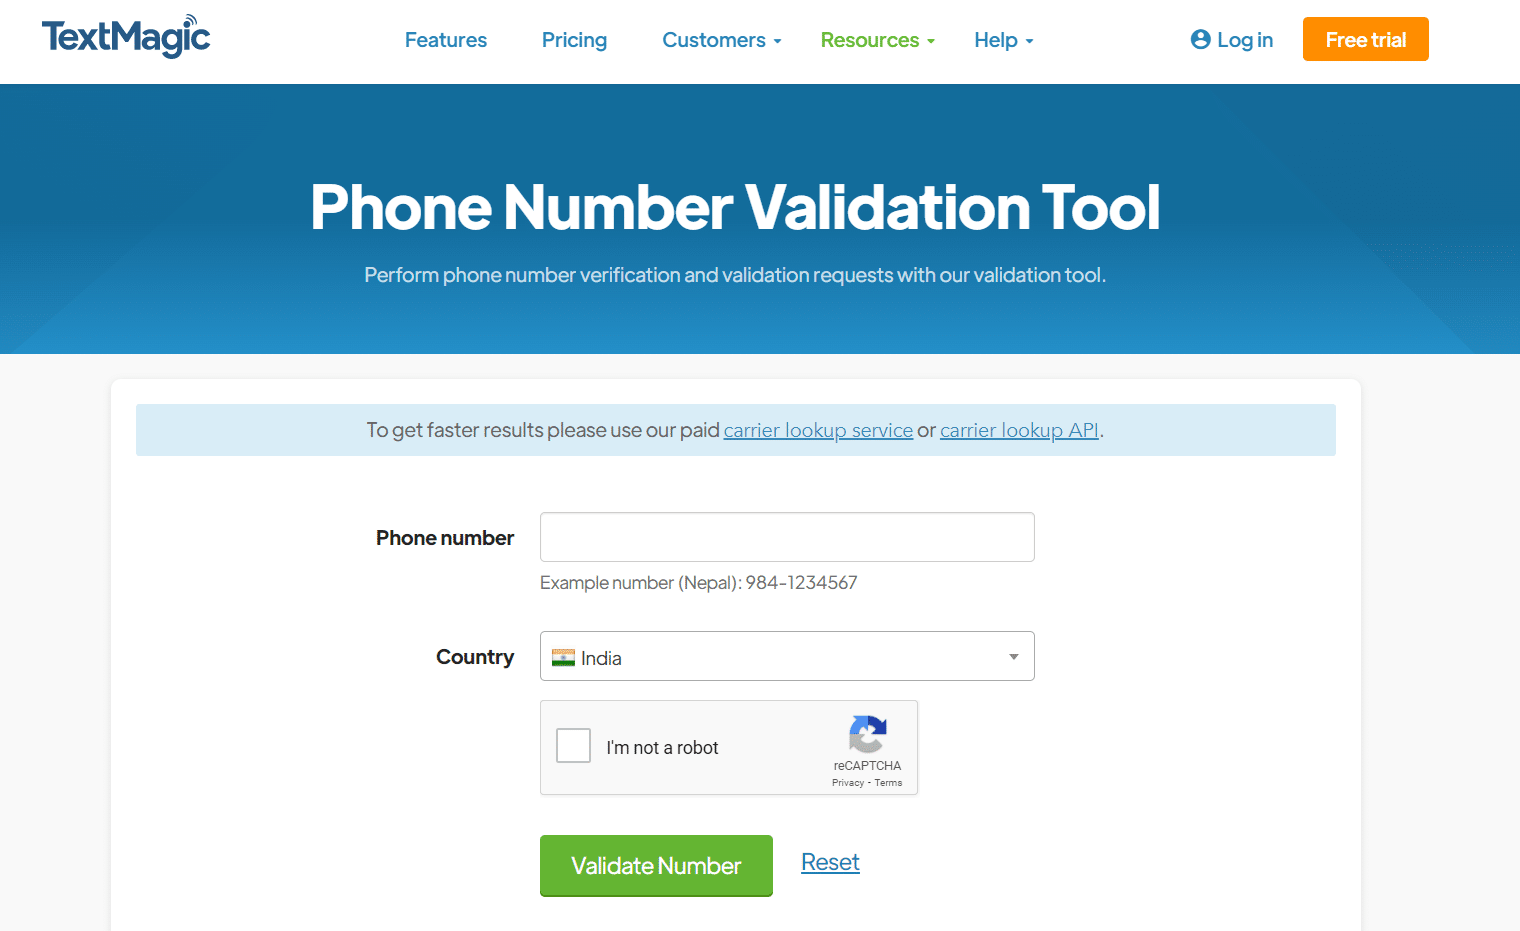 Phone number validation tool webpage